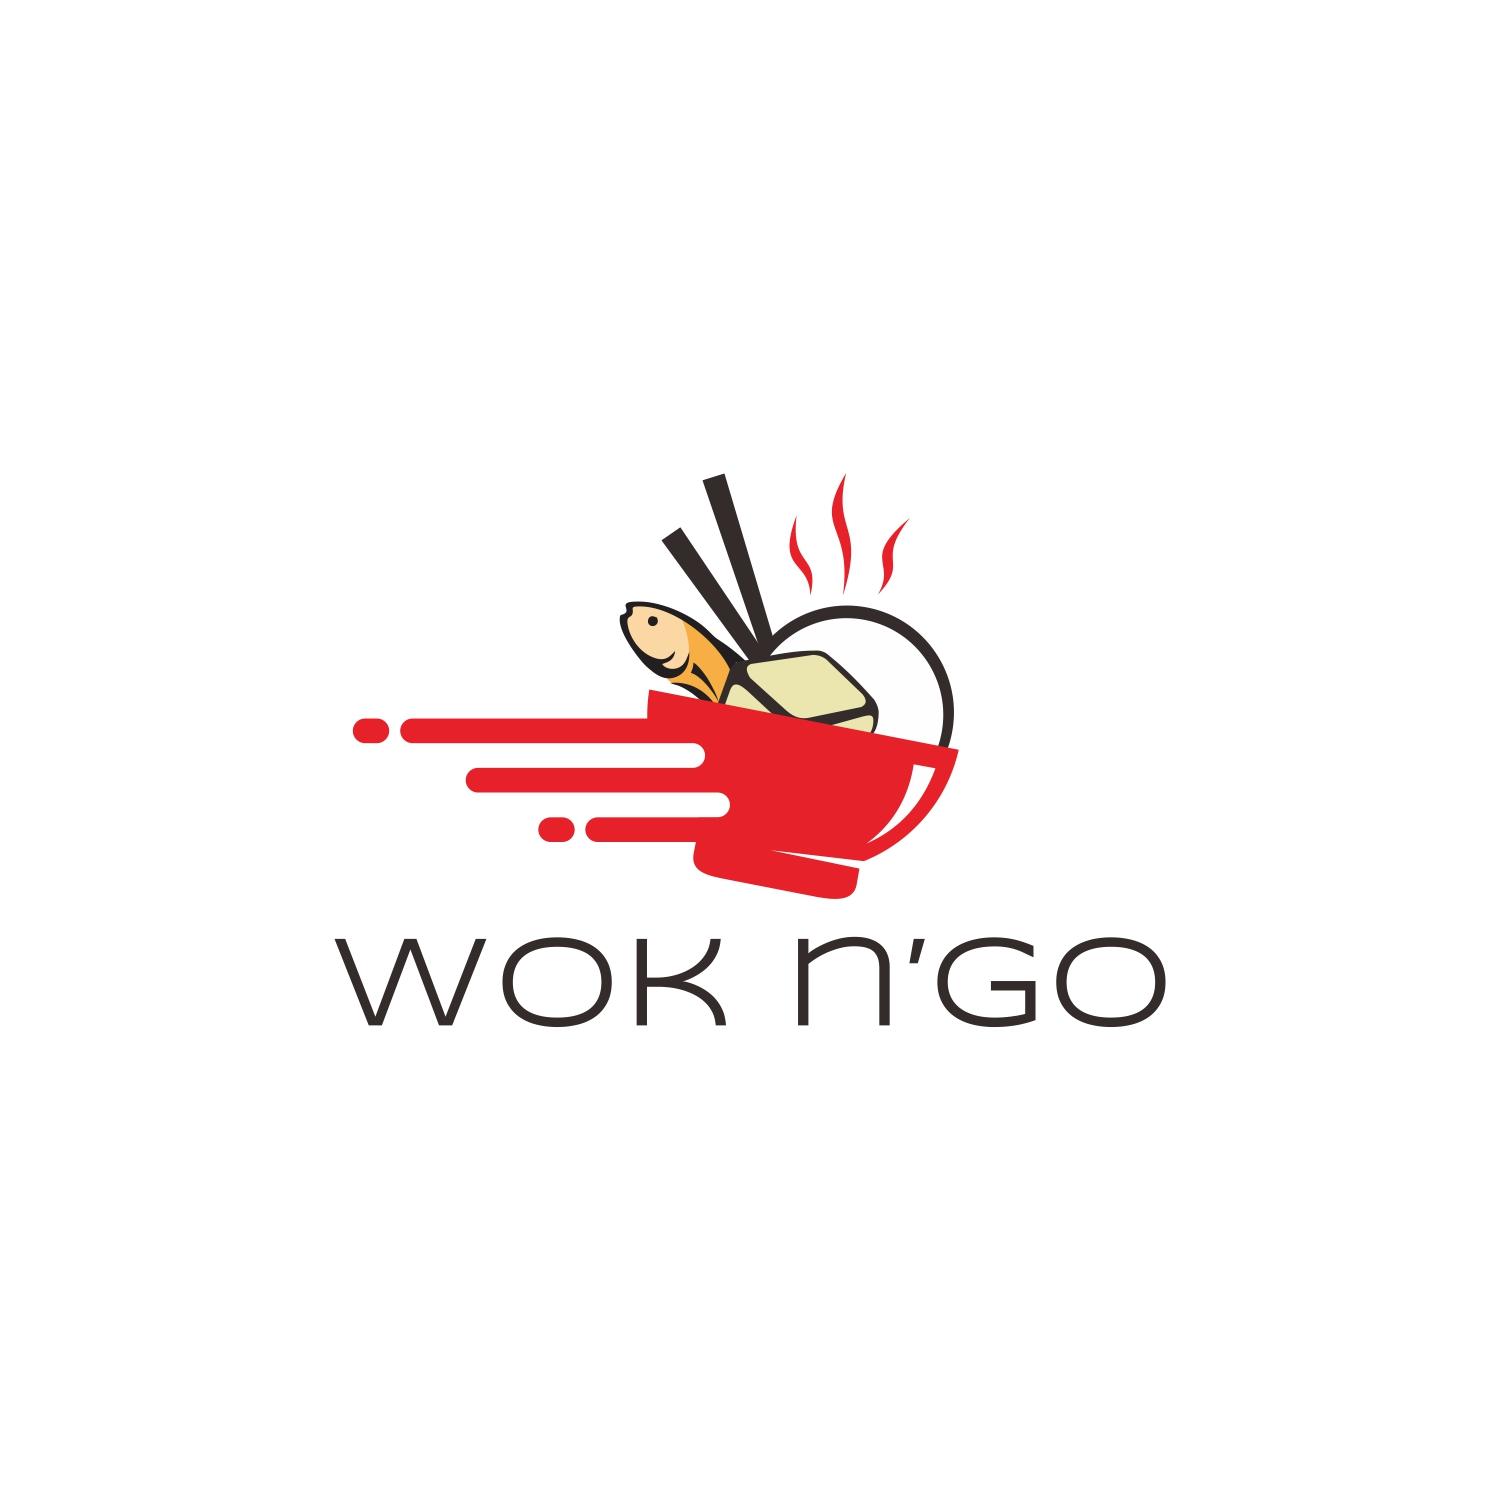 Go Food Logo - Modern, Playful, Fast Food Restaurant Logo Design for Wok n'go by ...